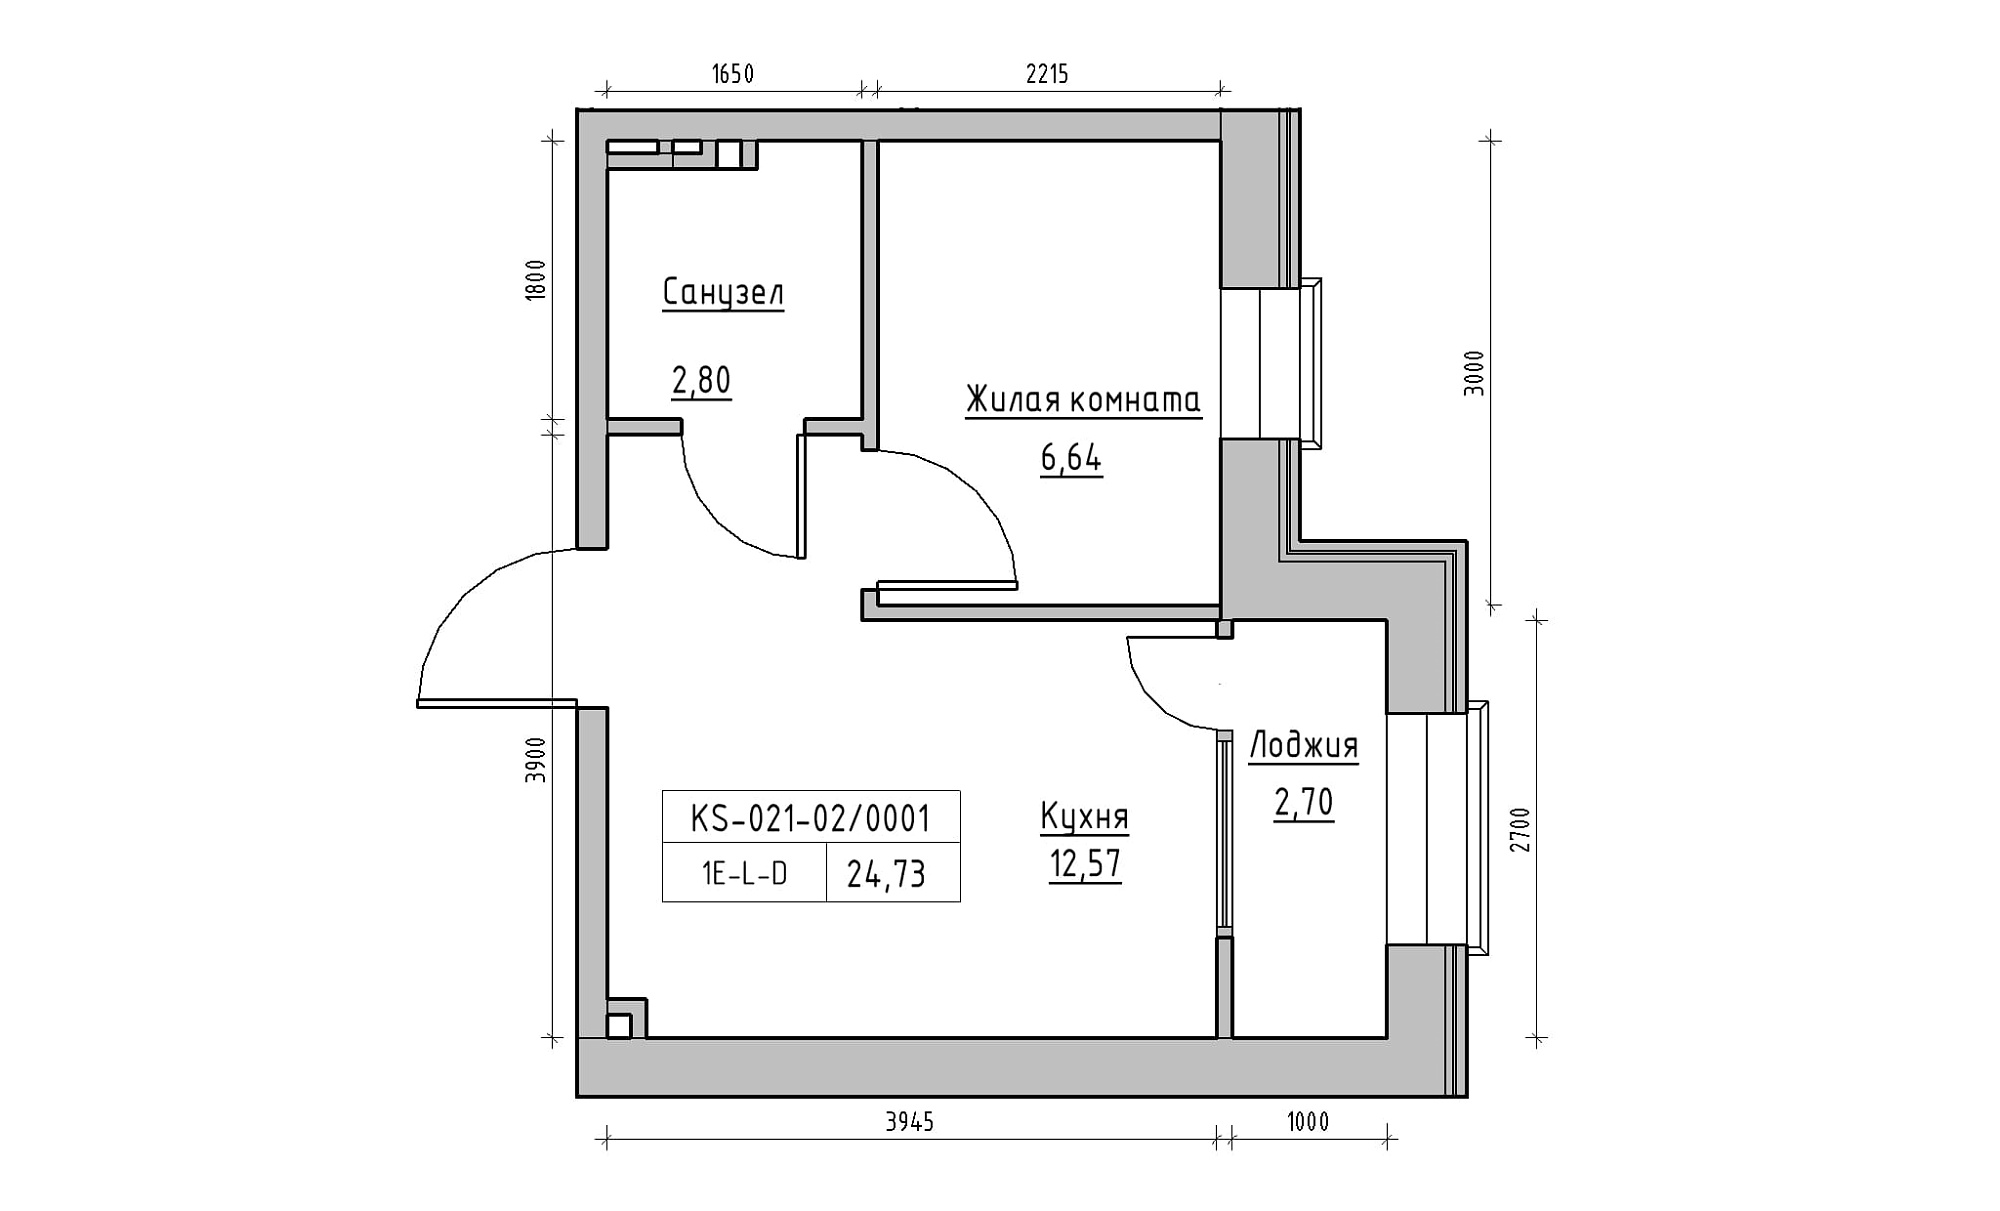 Planning 1-rm flats area 24.73m2, KS-021-02/0001.